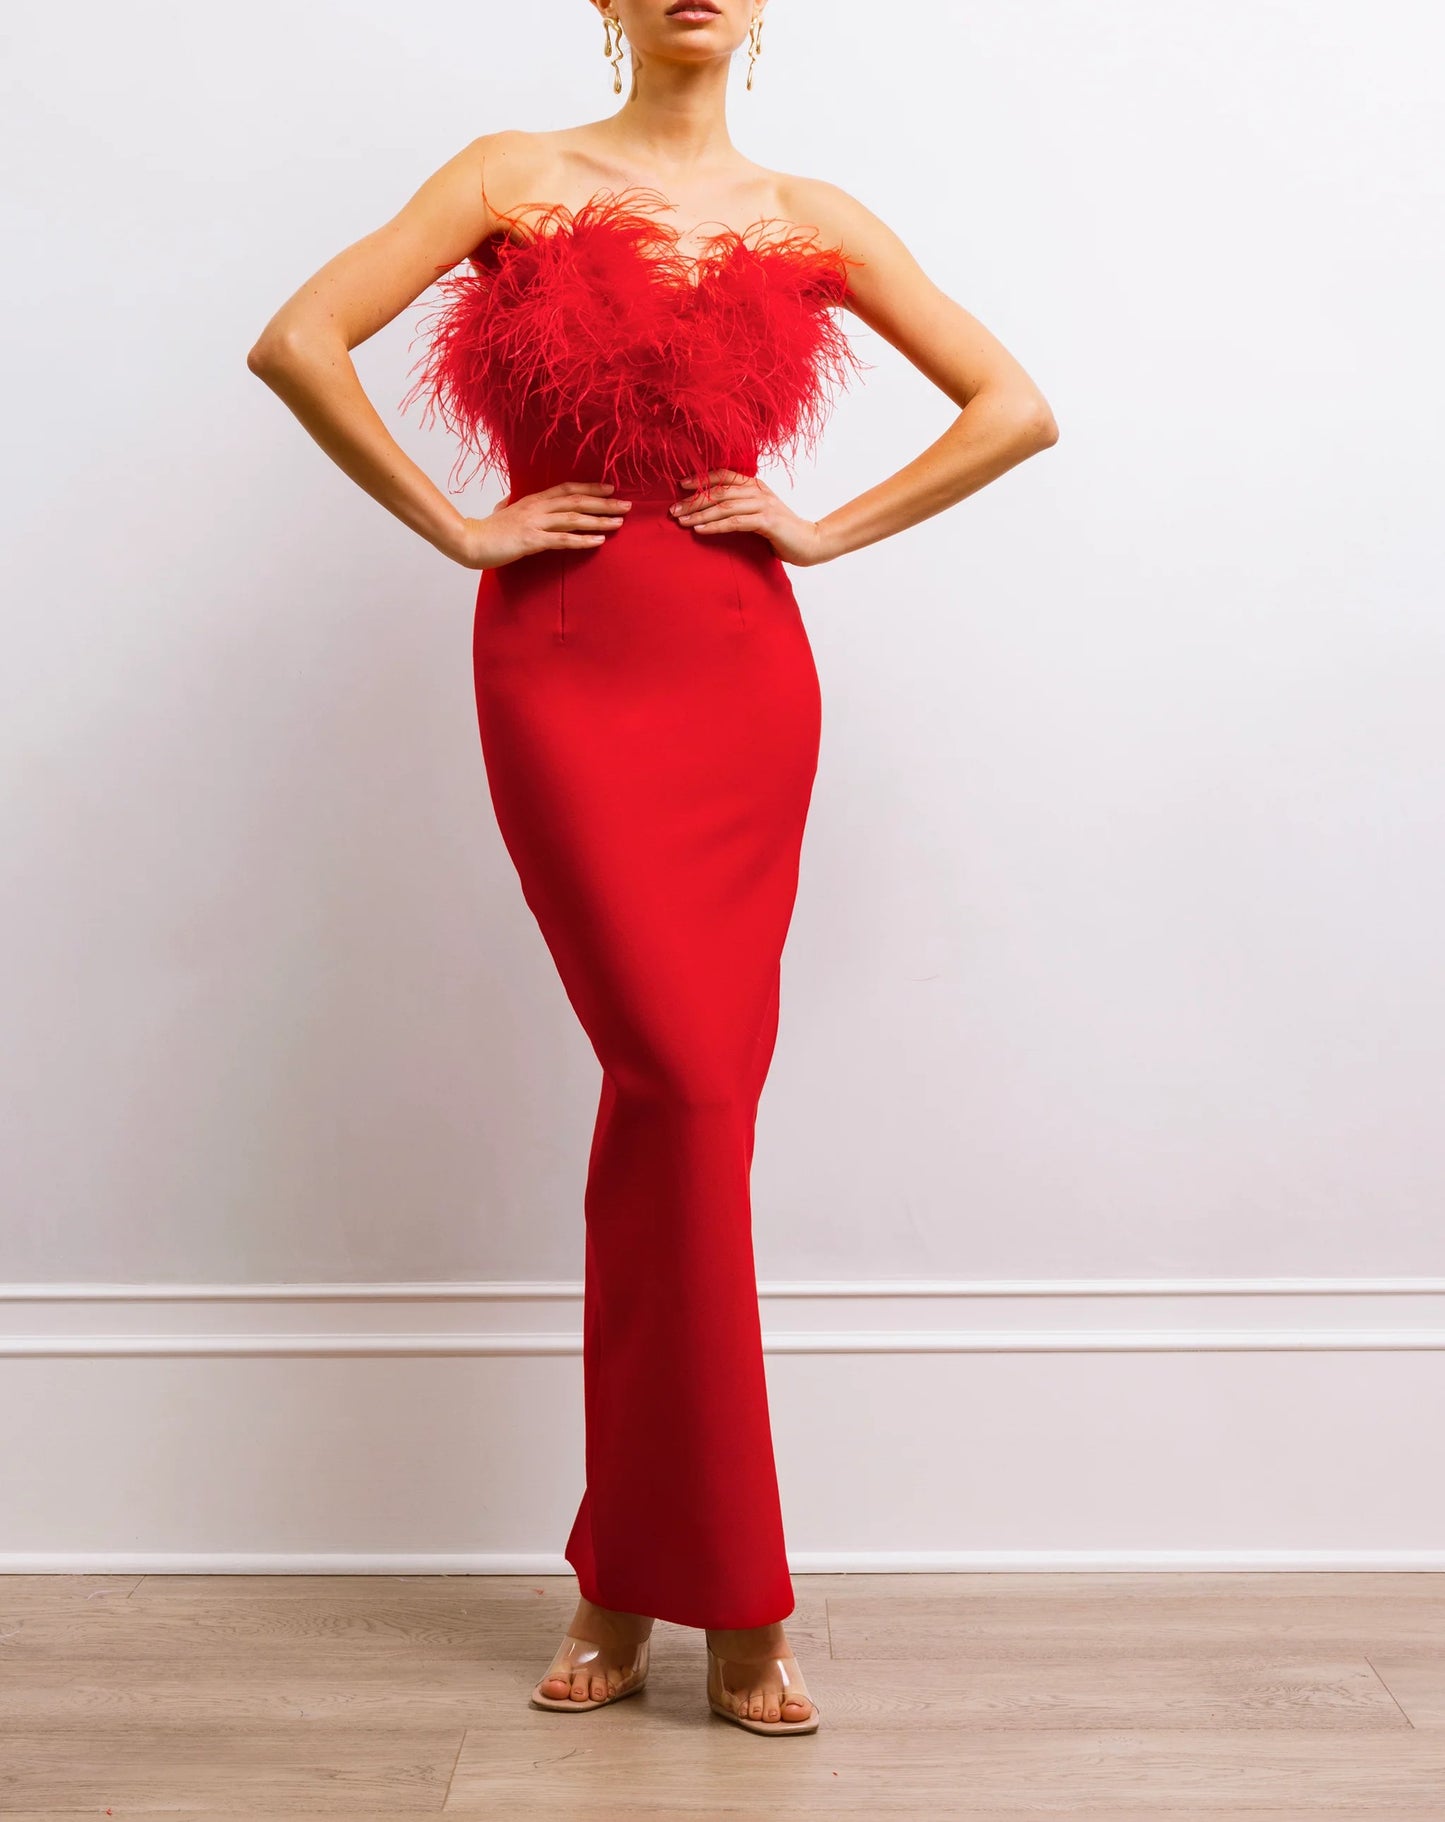 Feather dress red - Wedding guest dress, Partydress, red dress, valentines dress- Cielie 